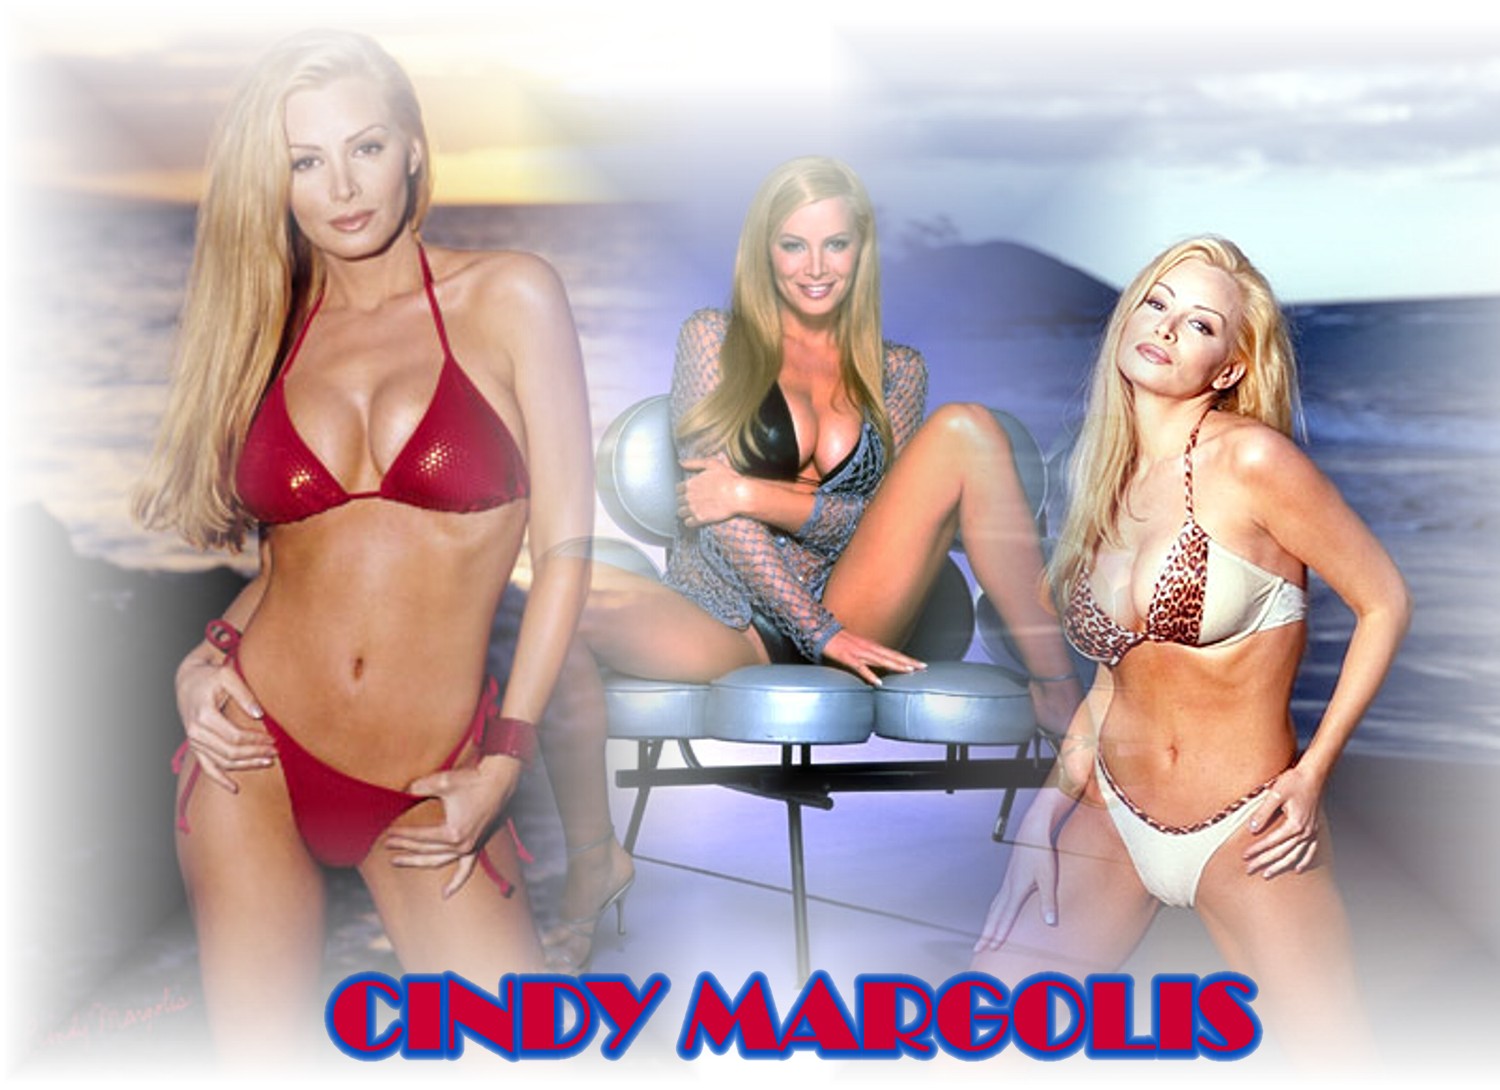 Cindy margolis 5